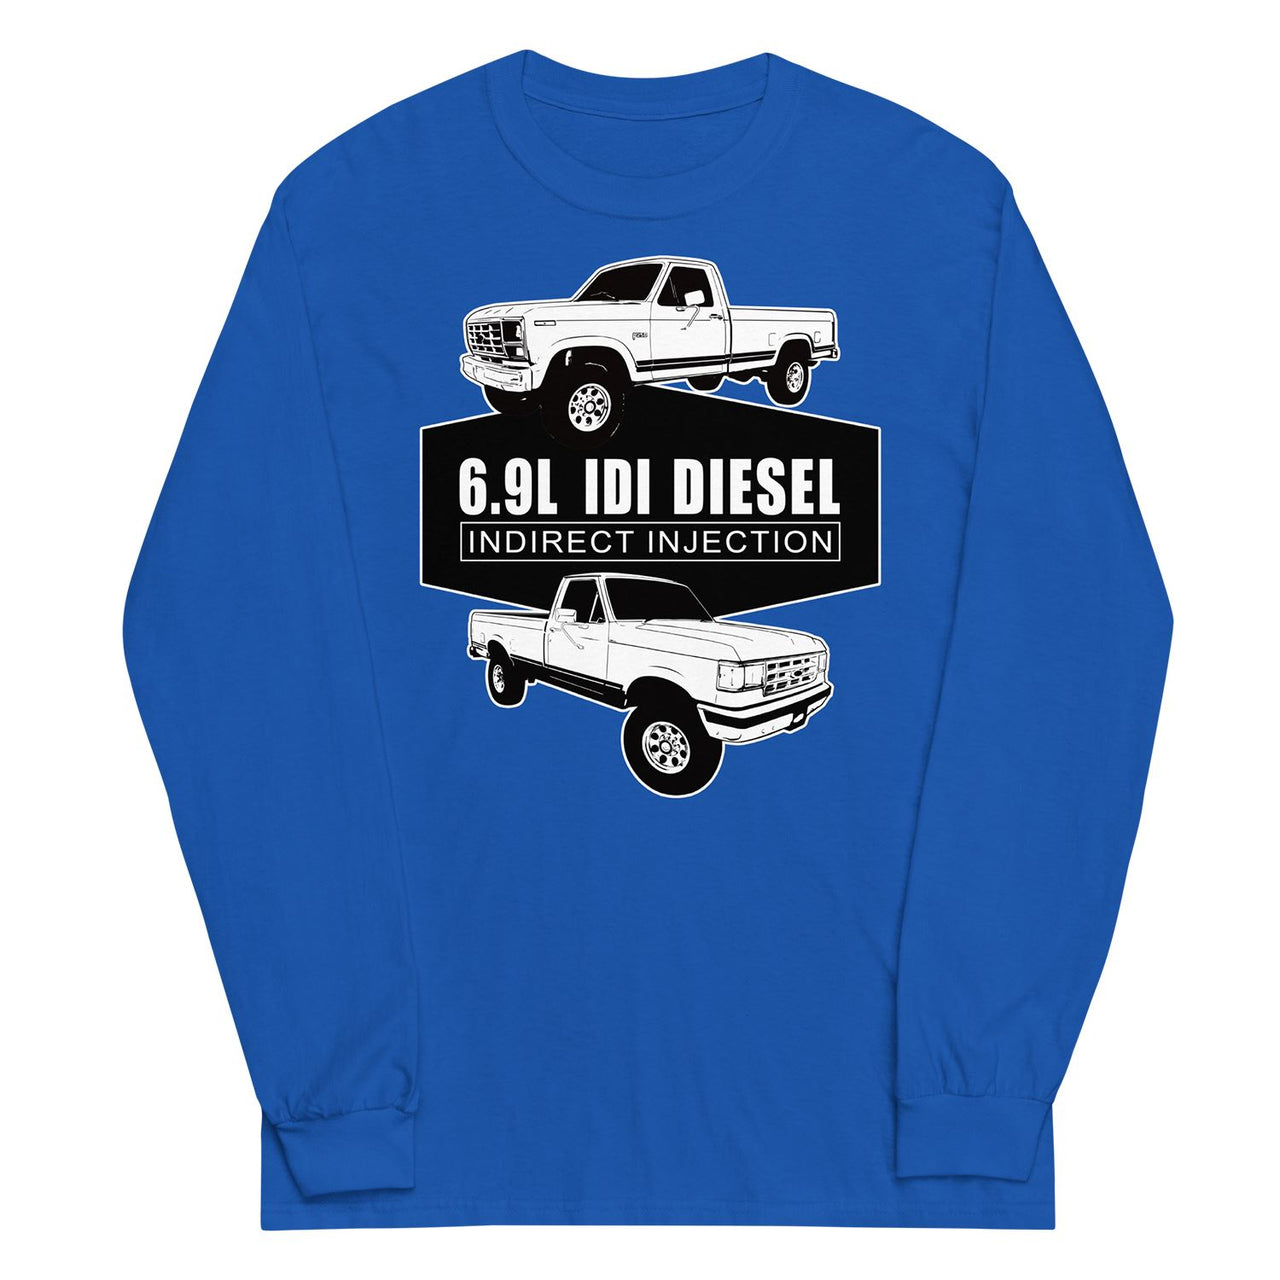 6.9 IDI Diesel Truck long sleeve Shirt in blue